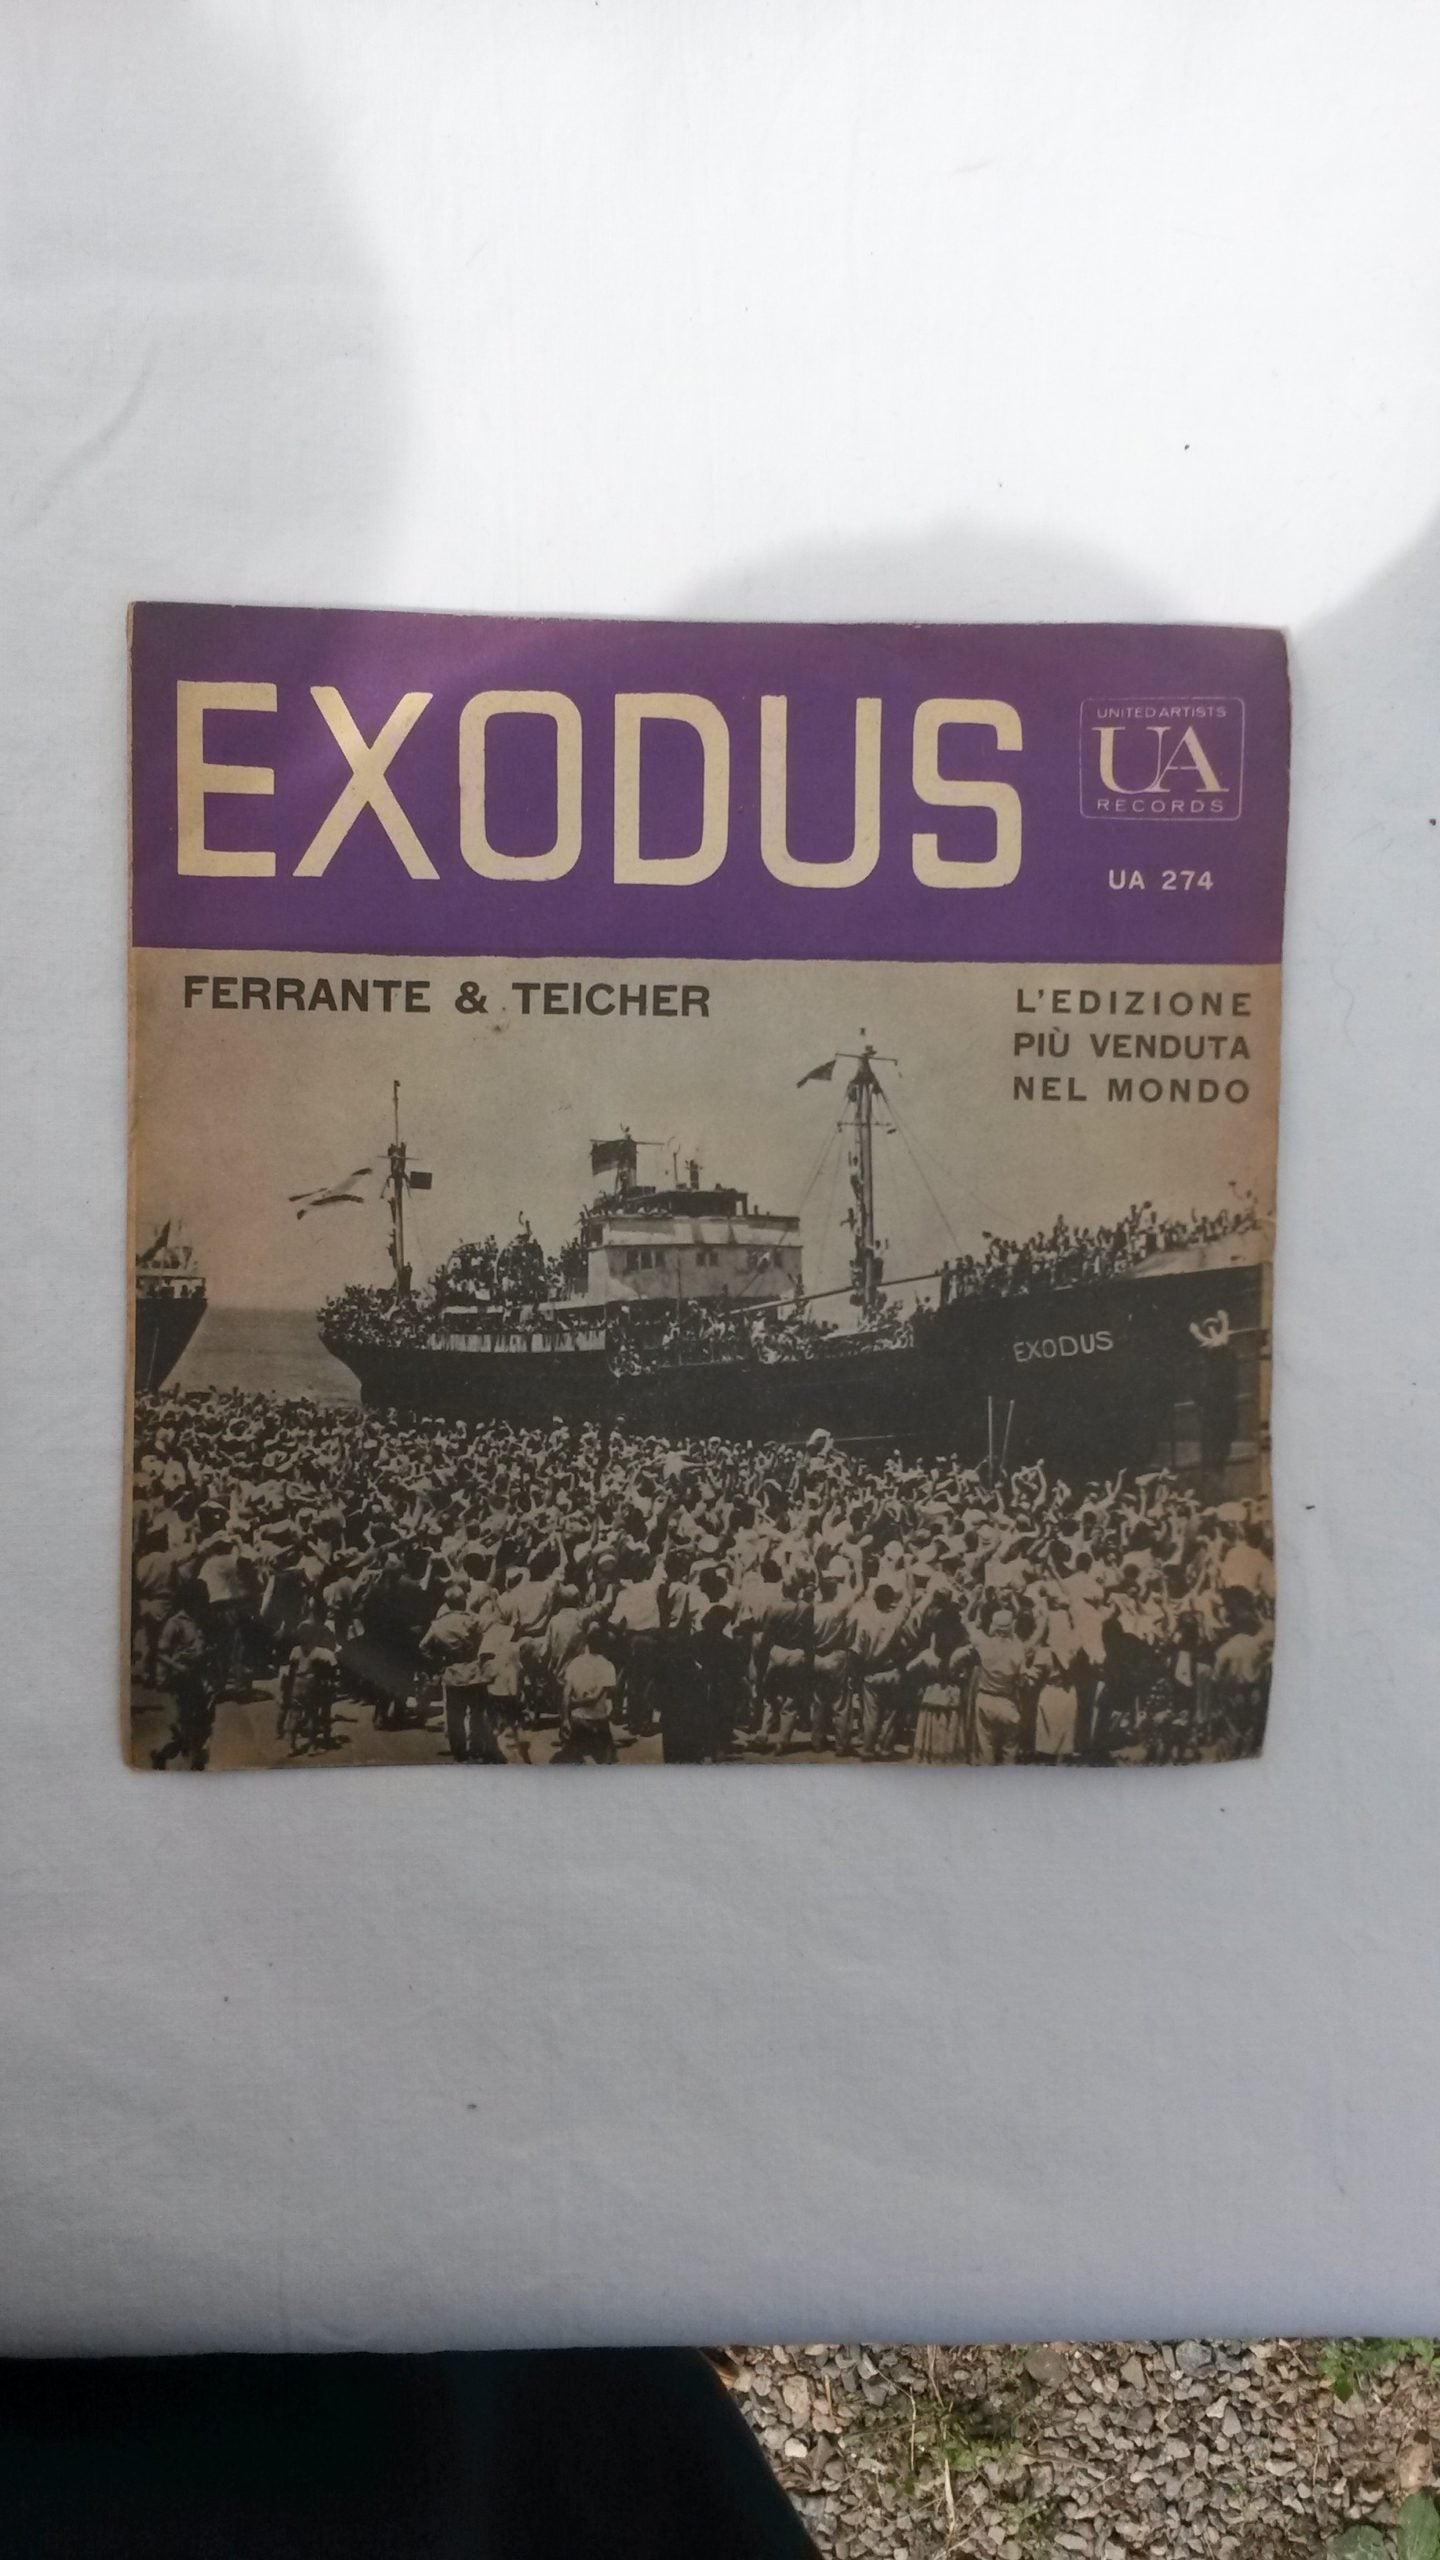 Exodus - NONèdabuttare